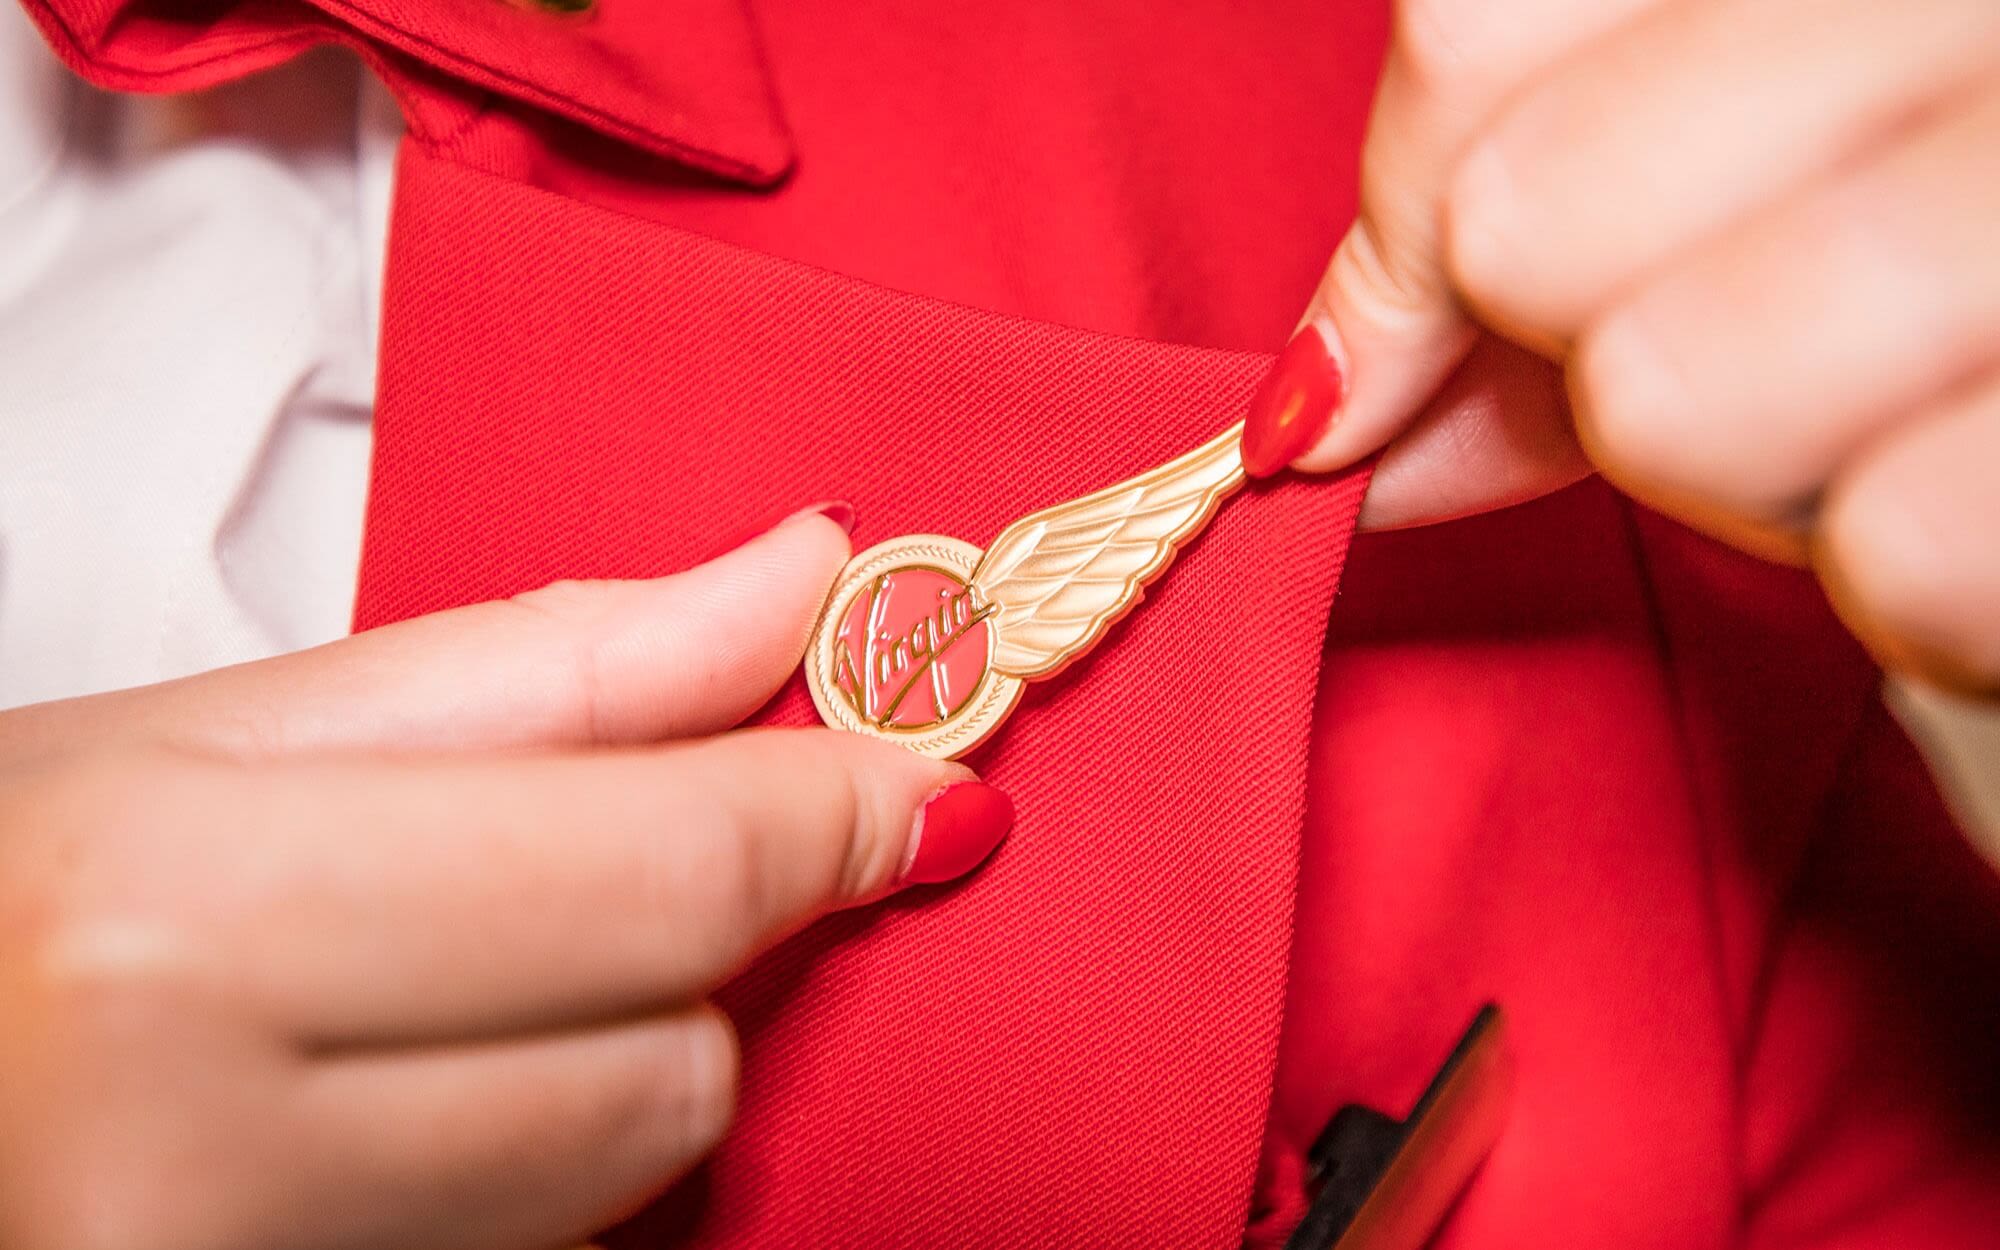 A Virgin Atlantic cabin crew member adjusts her wings pin on her jacket